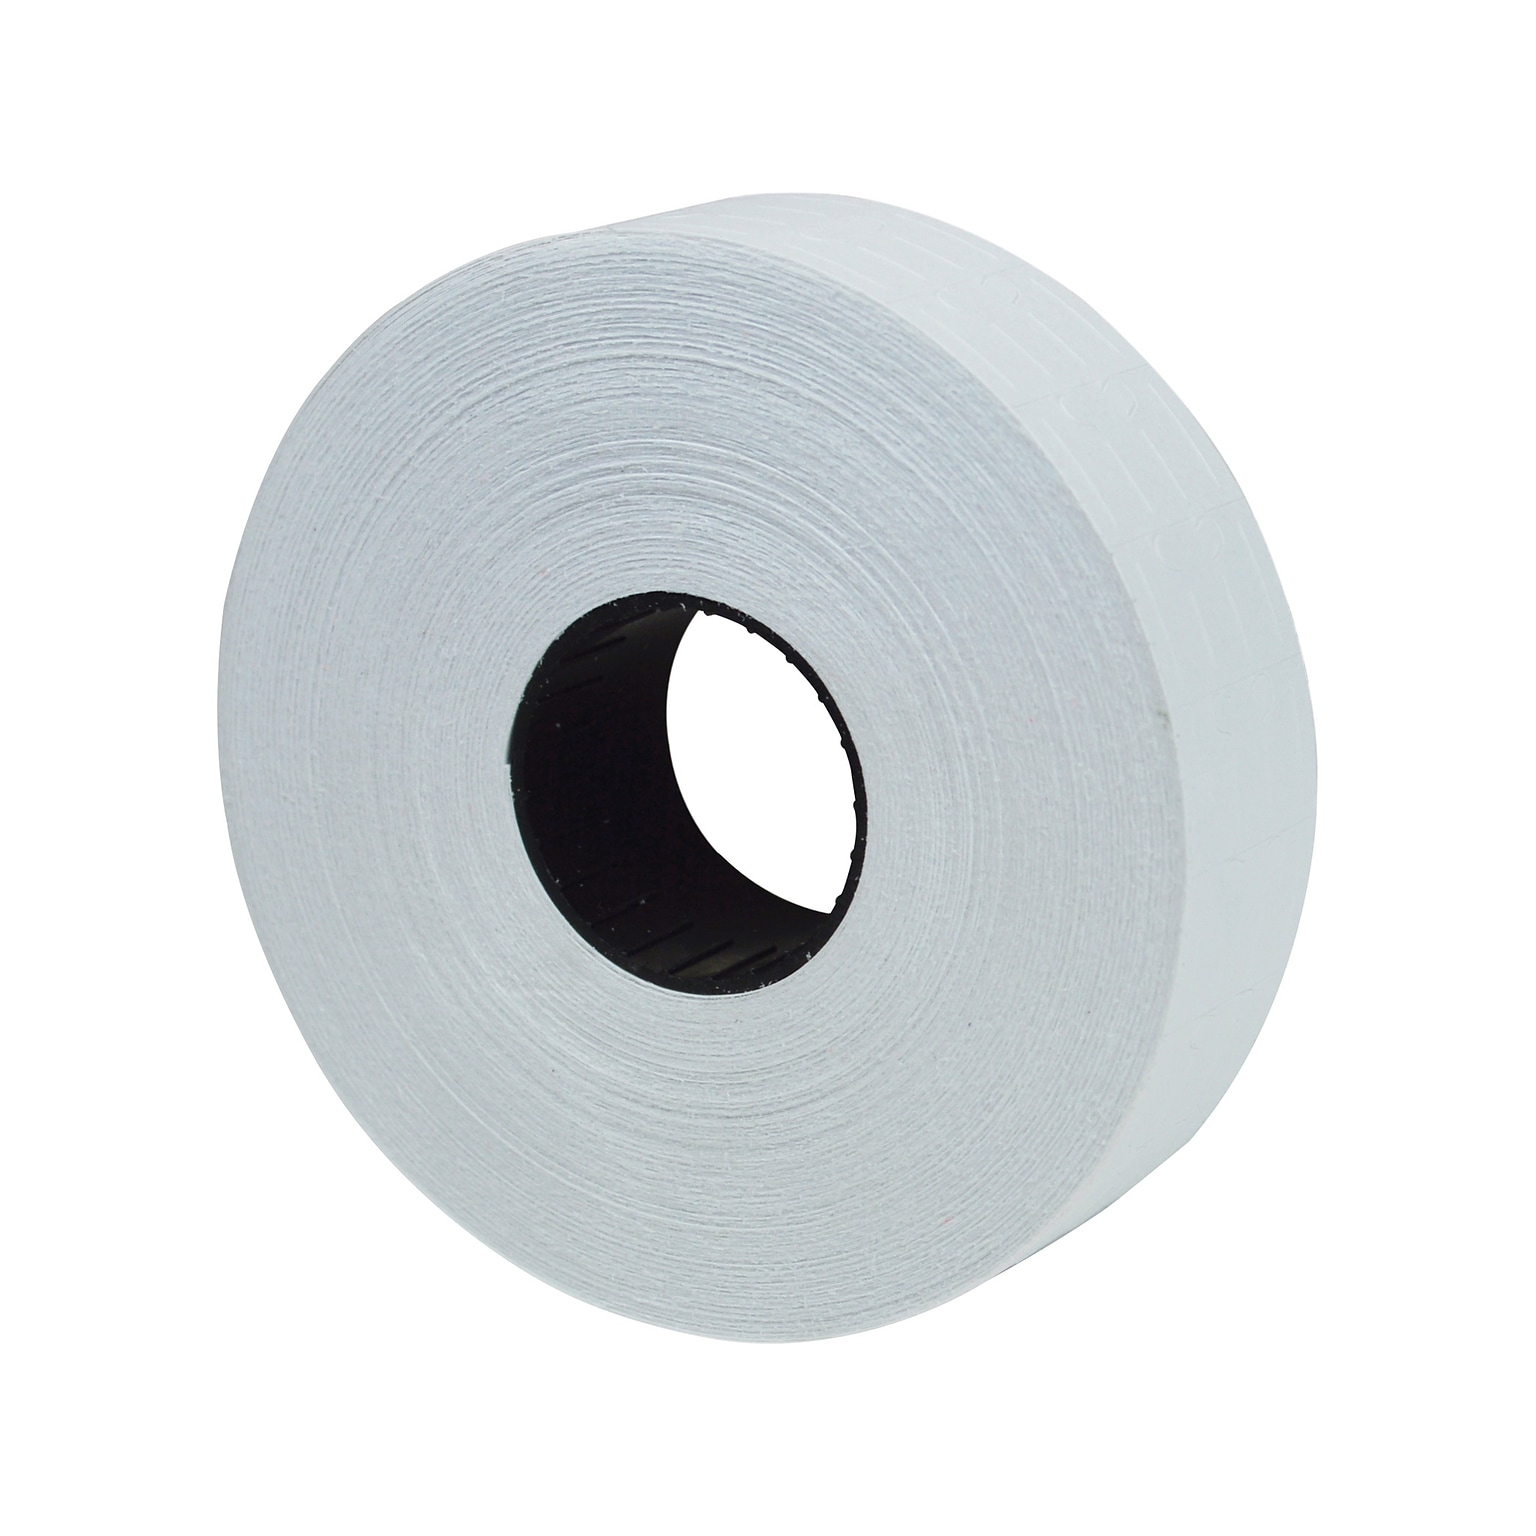 Garvey 1-Line Label Roll, White, 2500 Labels/Roll (098612)